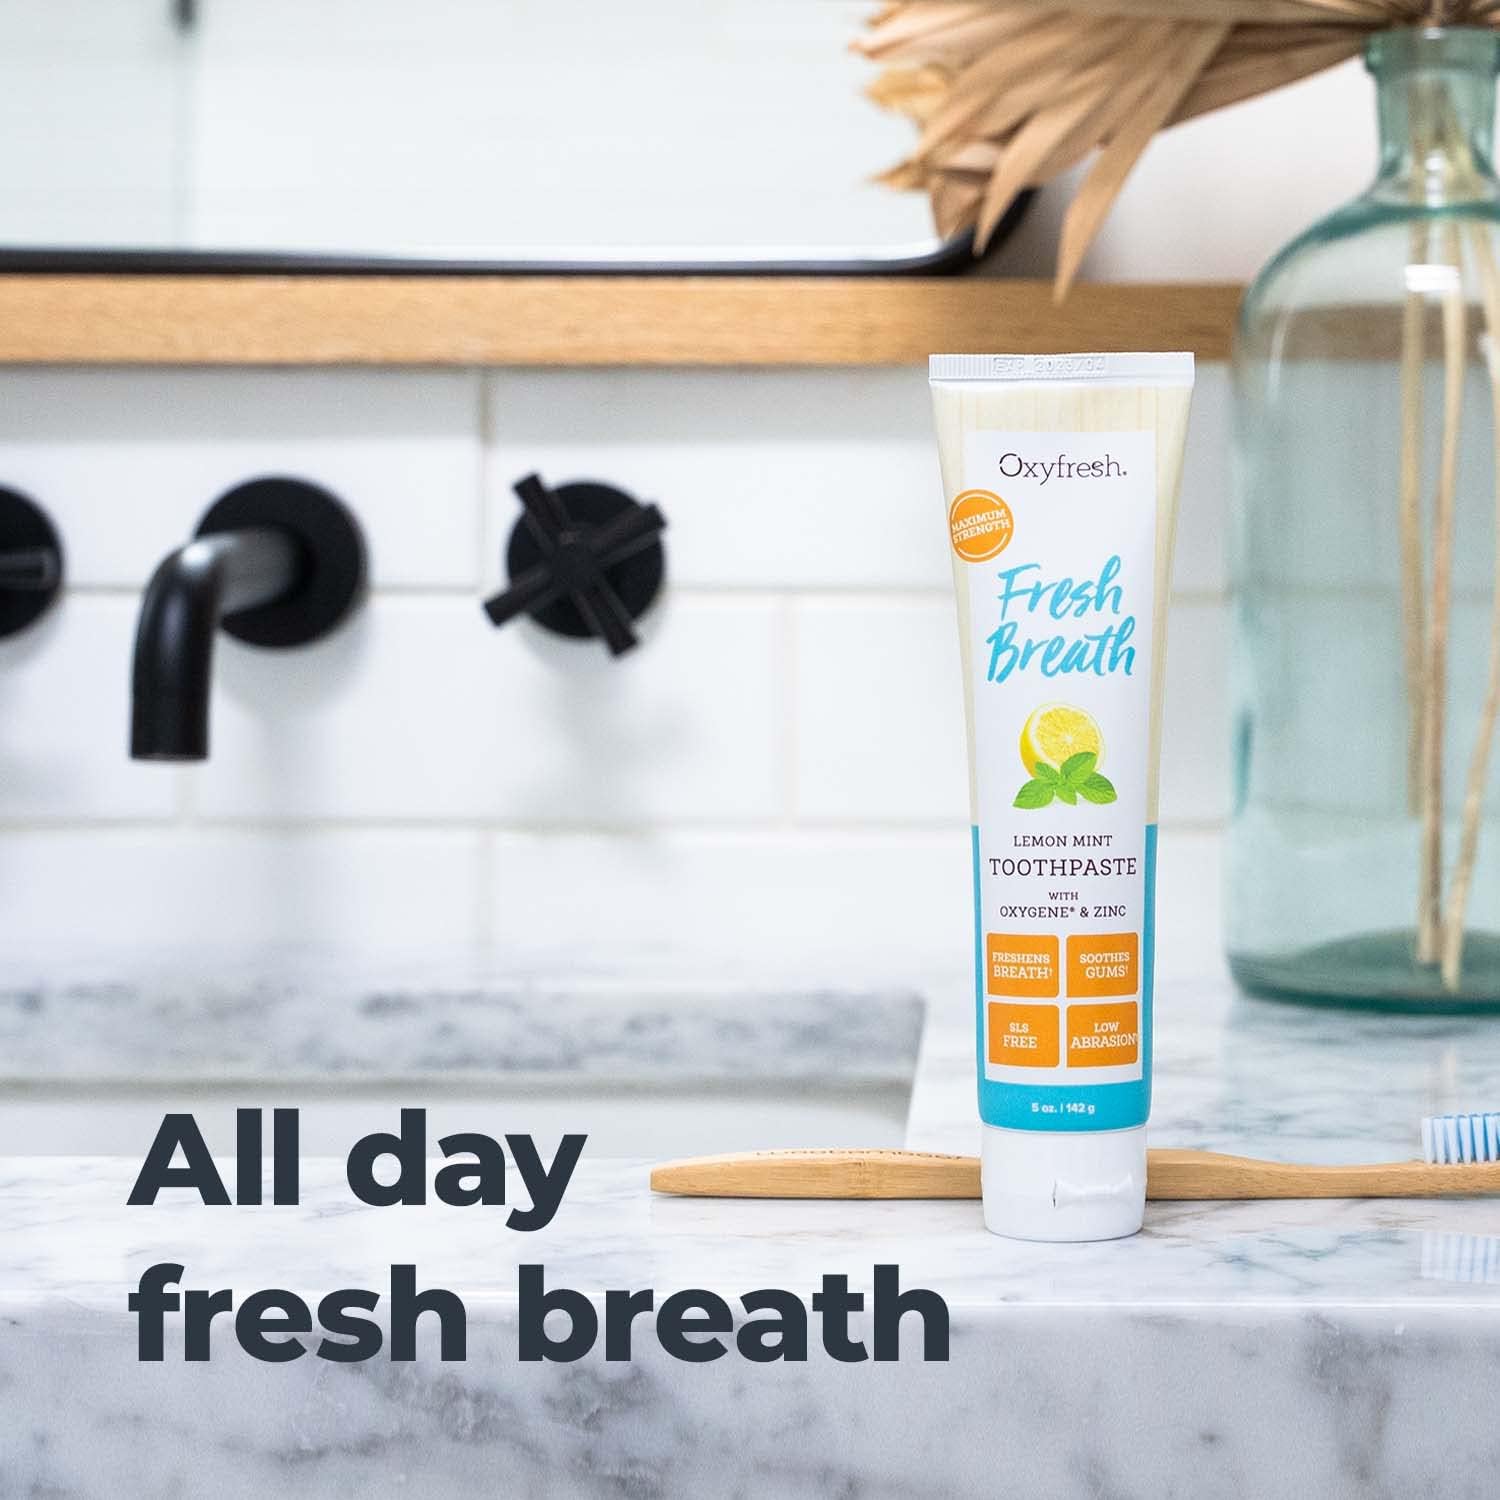 Premium Oxyfresh Maximum Fresh Breath Lemon Mint Toothpaste - Clean Teeth & Fresh Breath - Natural Essential Oils & Natural Xylitol to Help Fight Tartar - SLS & Fluoride Free, 3-5oz : Health & Household